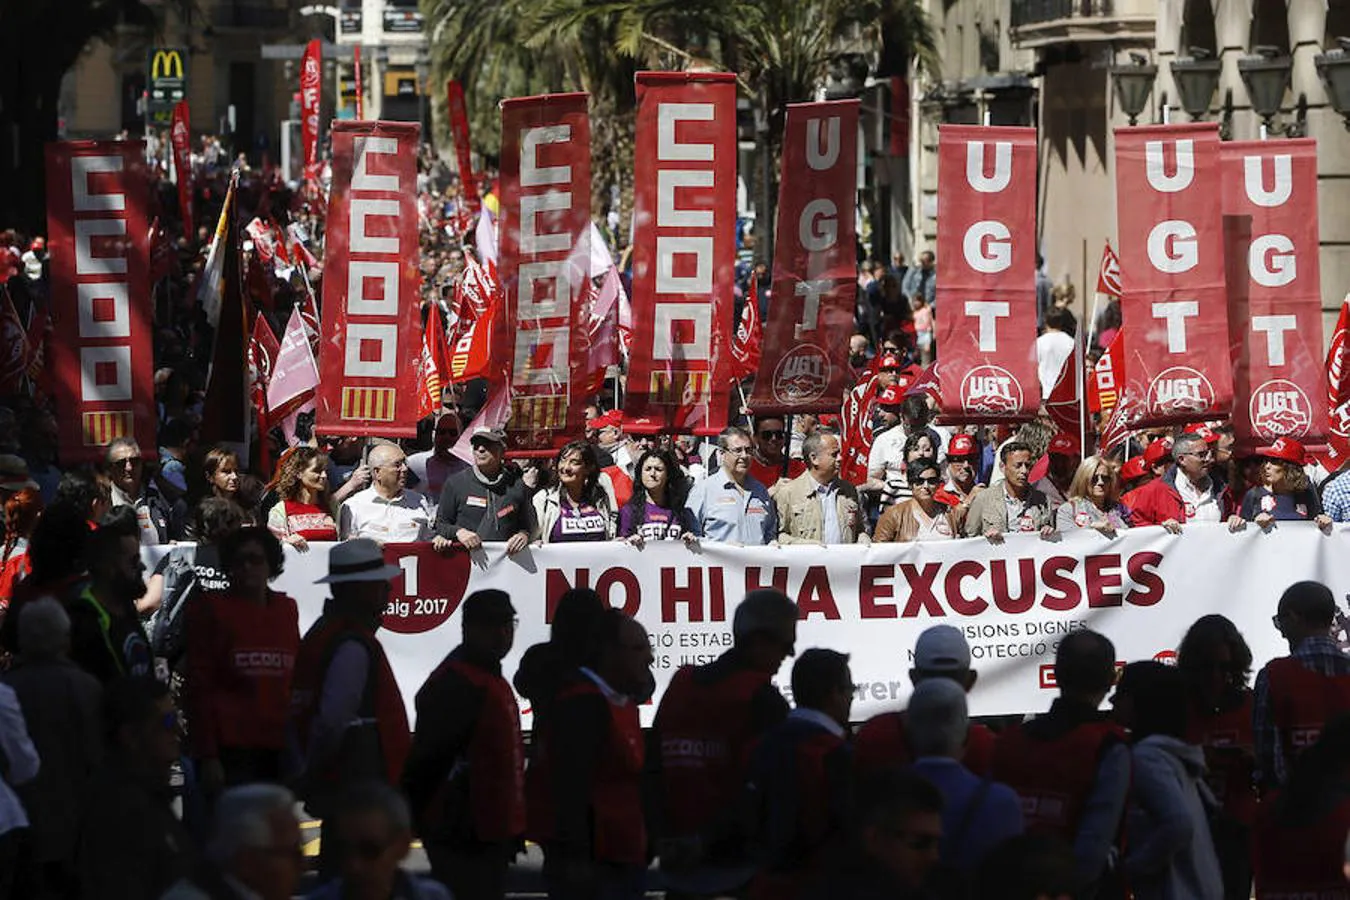 Vista general de la manifestación hoy en València, con motivo del primero de mayo, bajo el lema "No hi ha excuses. Ocupació estable. Salaris justos. Pensions dignes. Més protecció social"